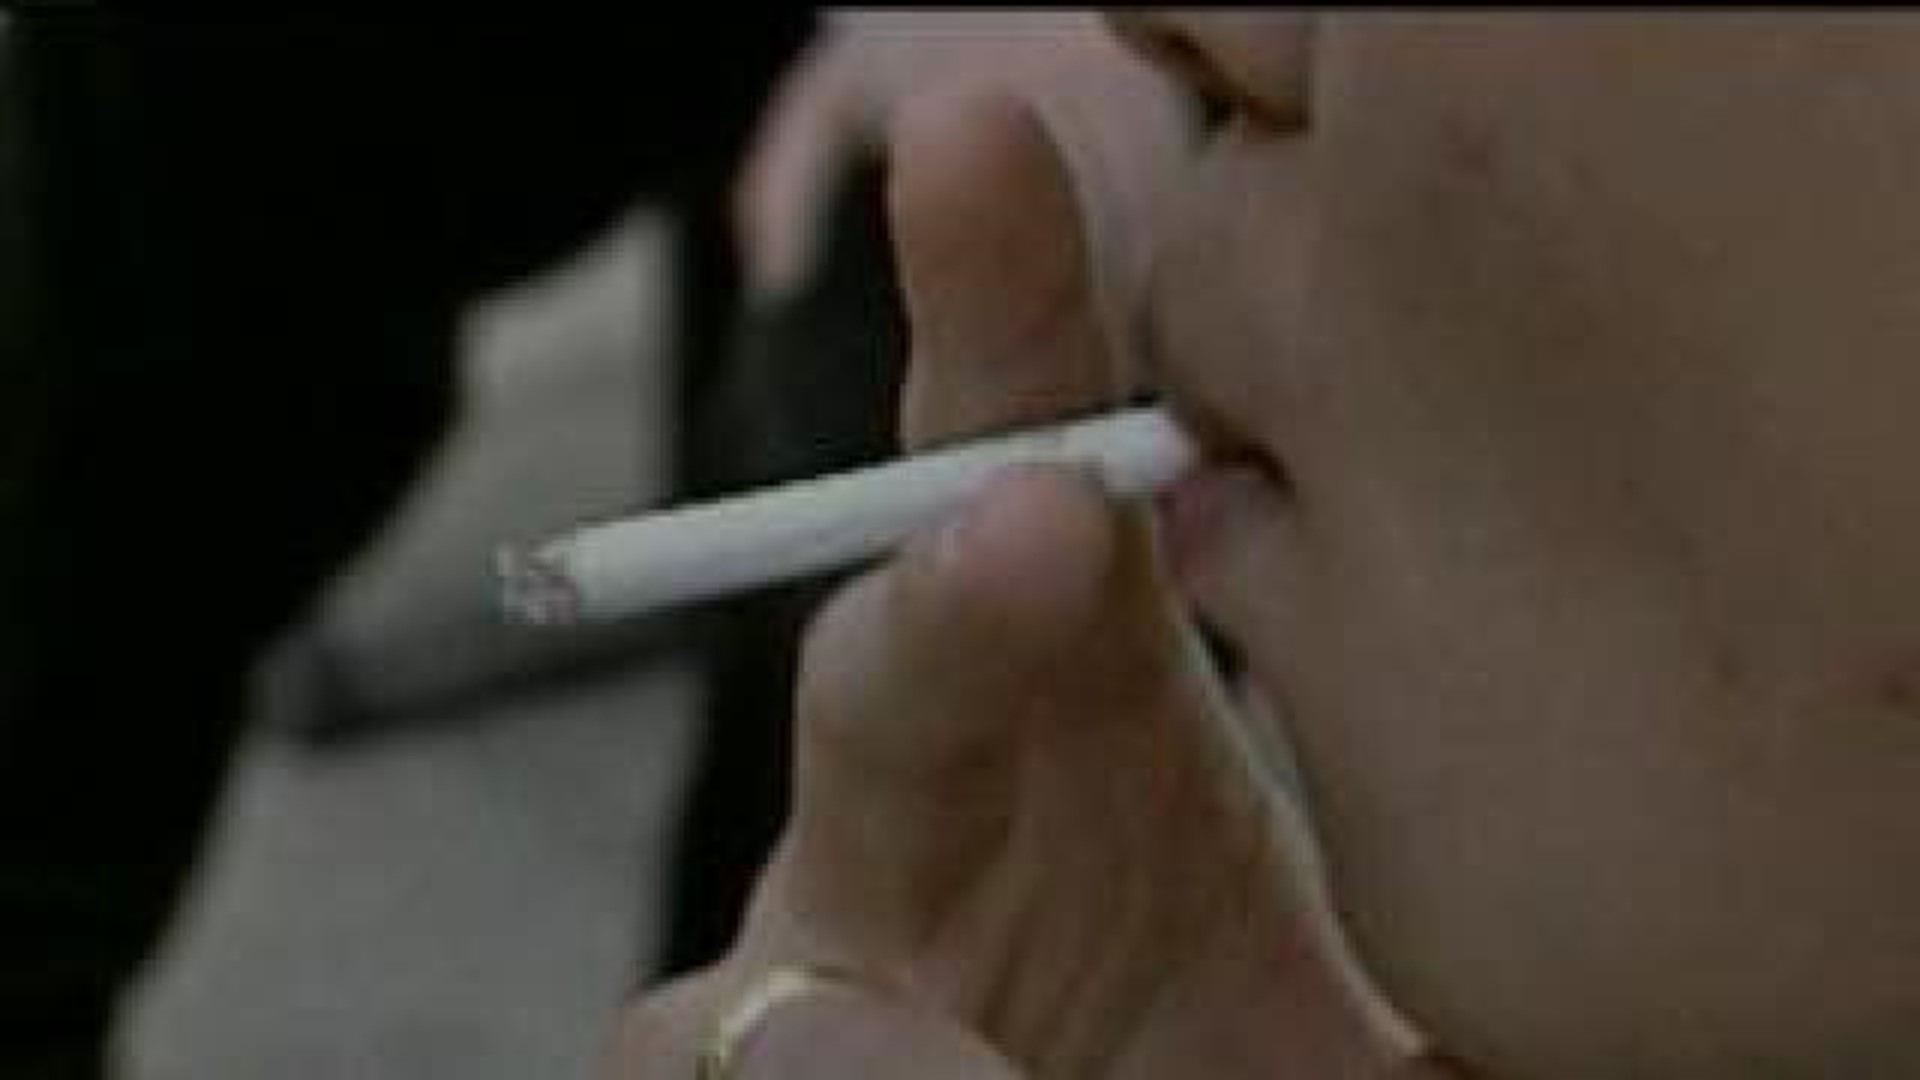 New Smoking Ban in Illinois